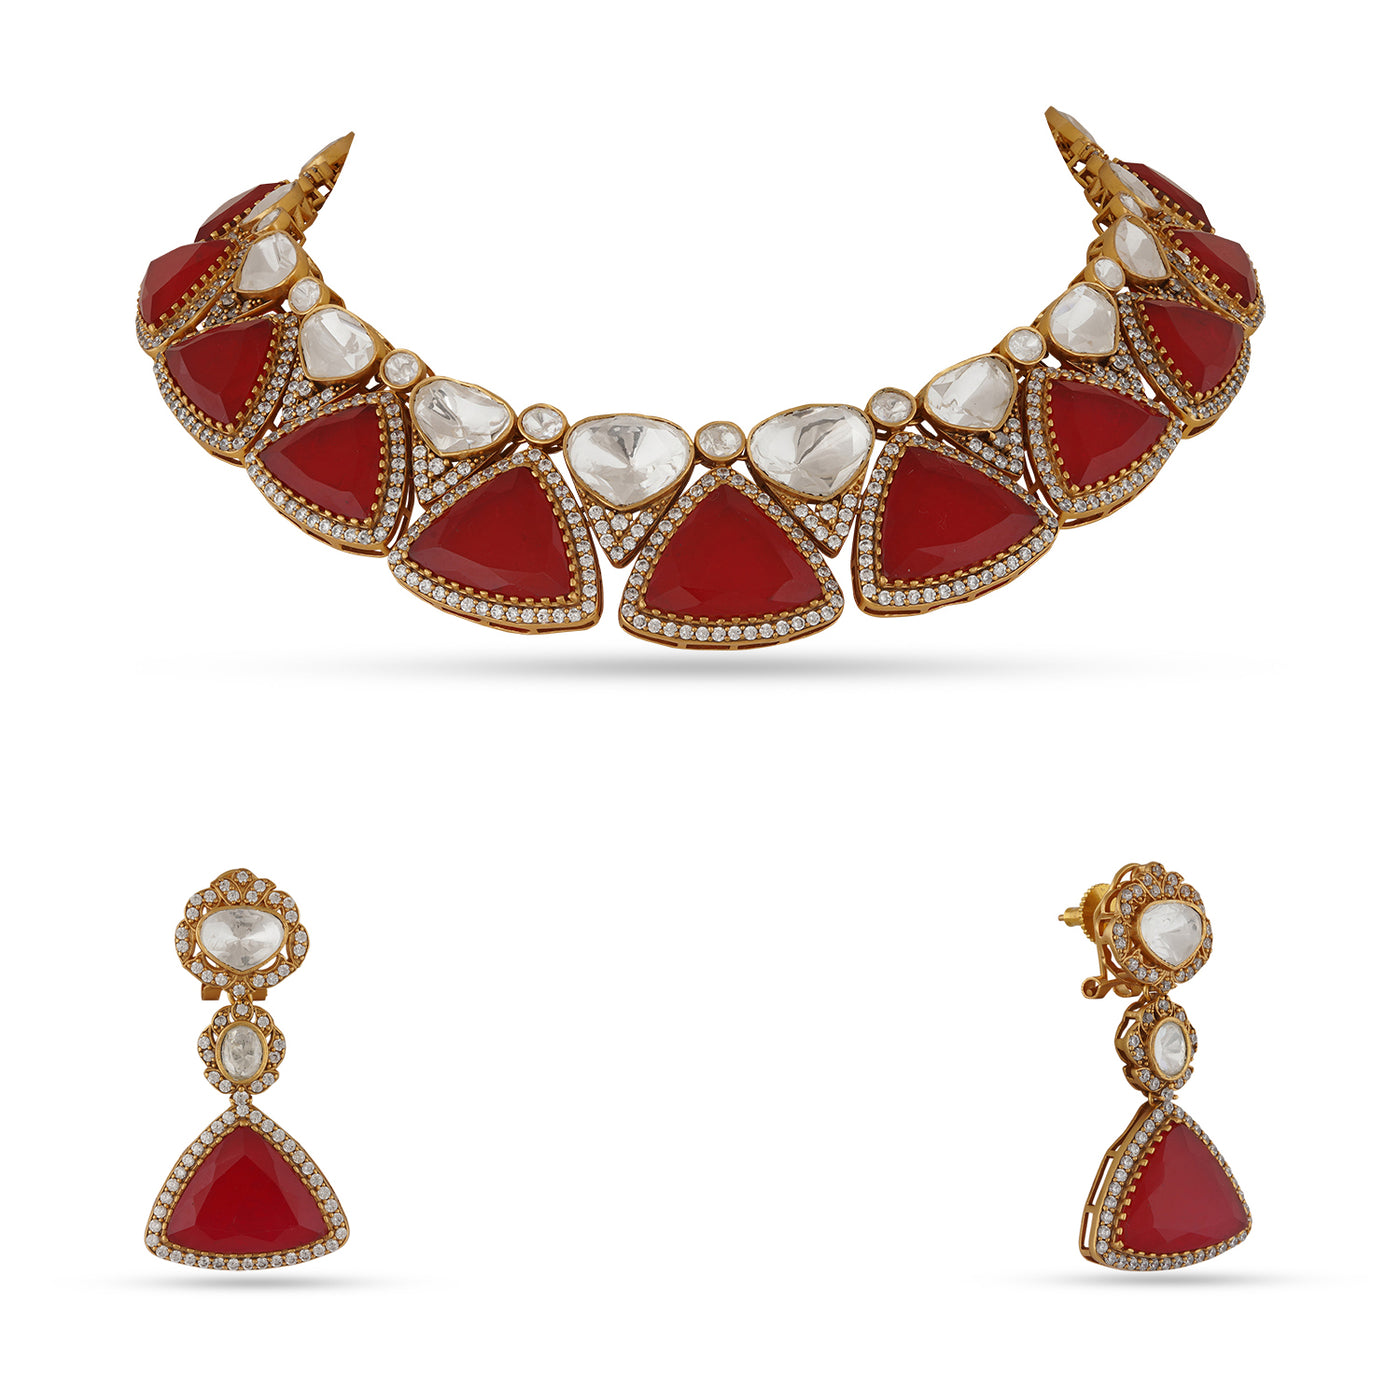 Feerozah - Polki and red stone necklace set